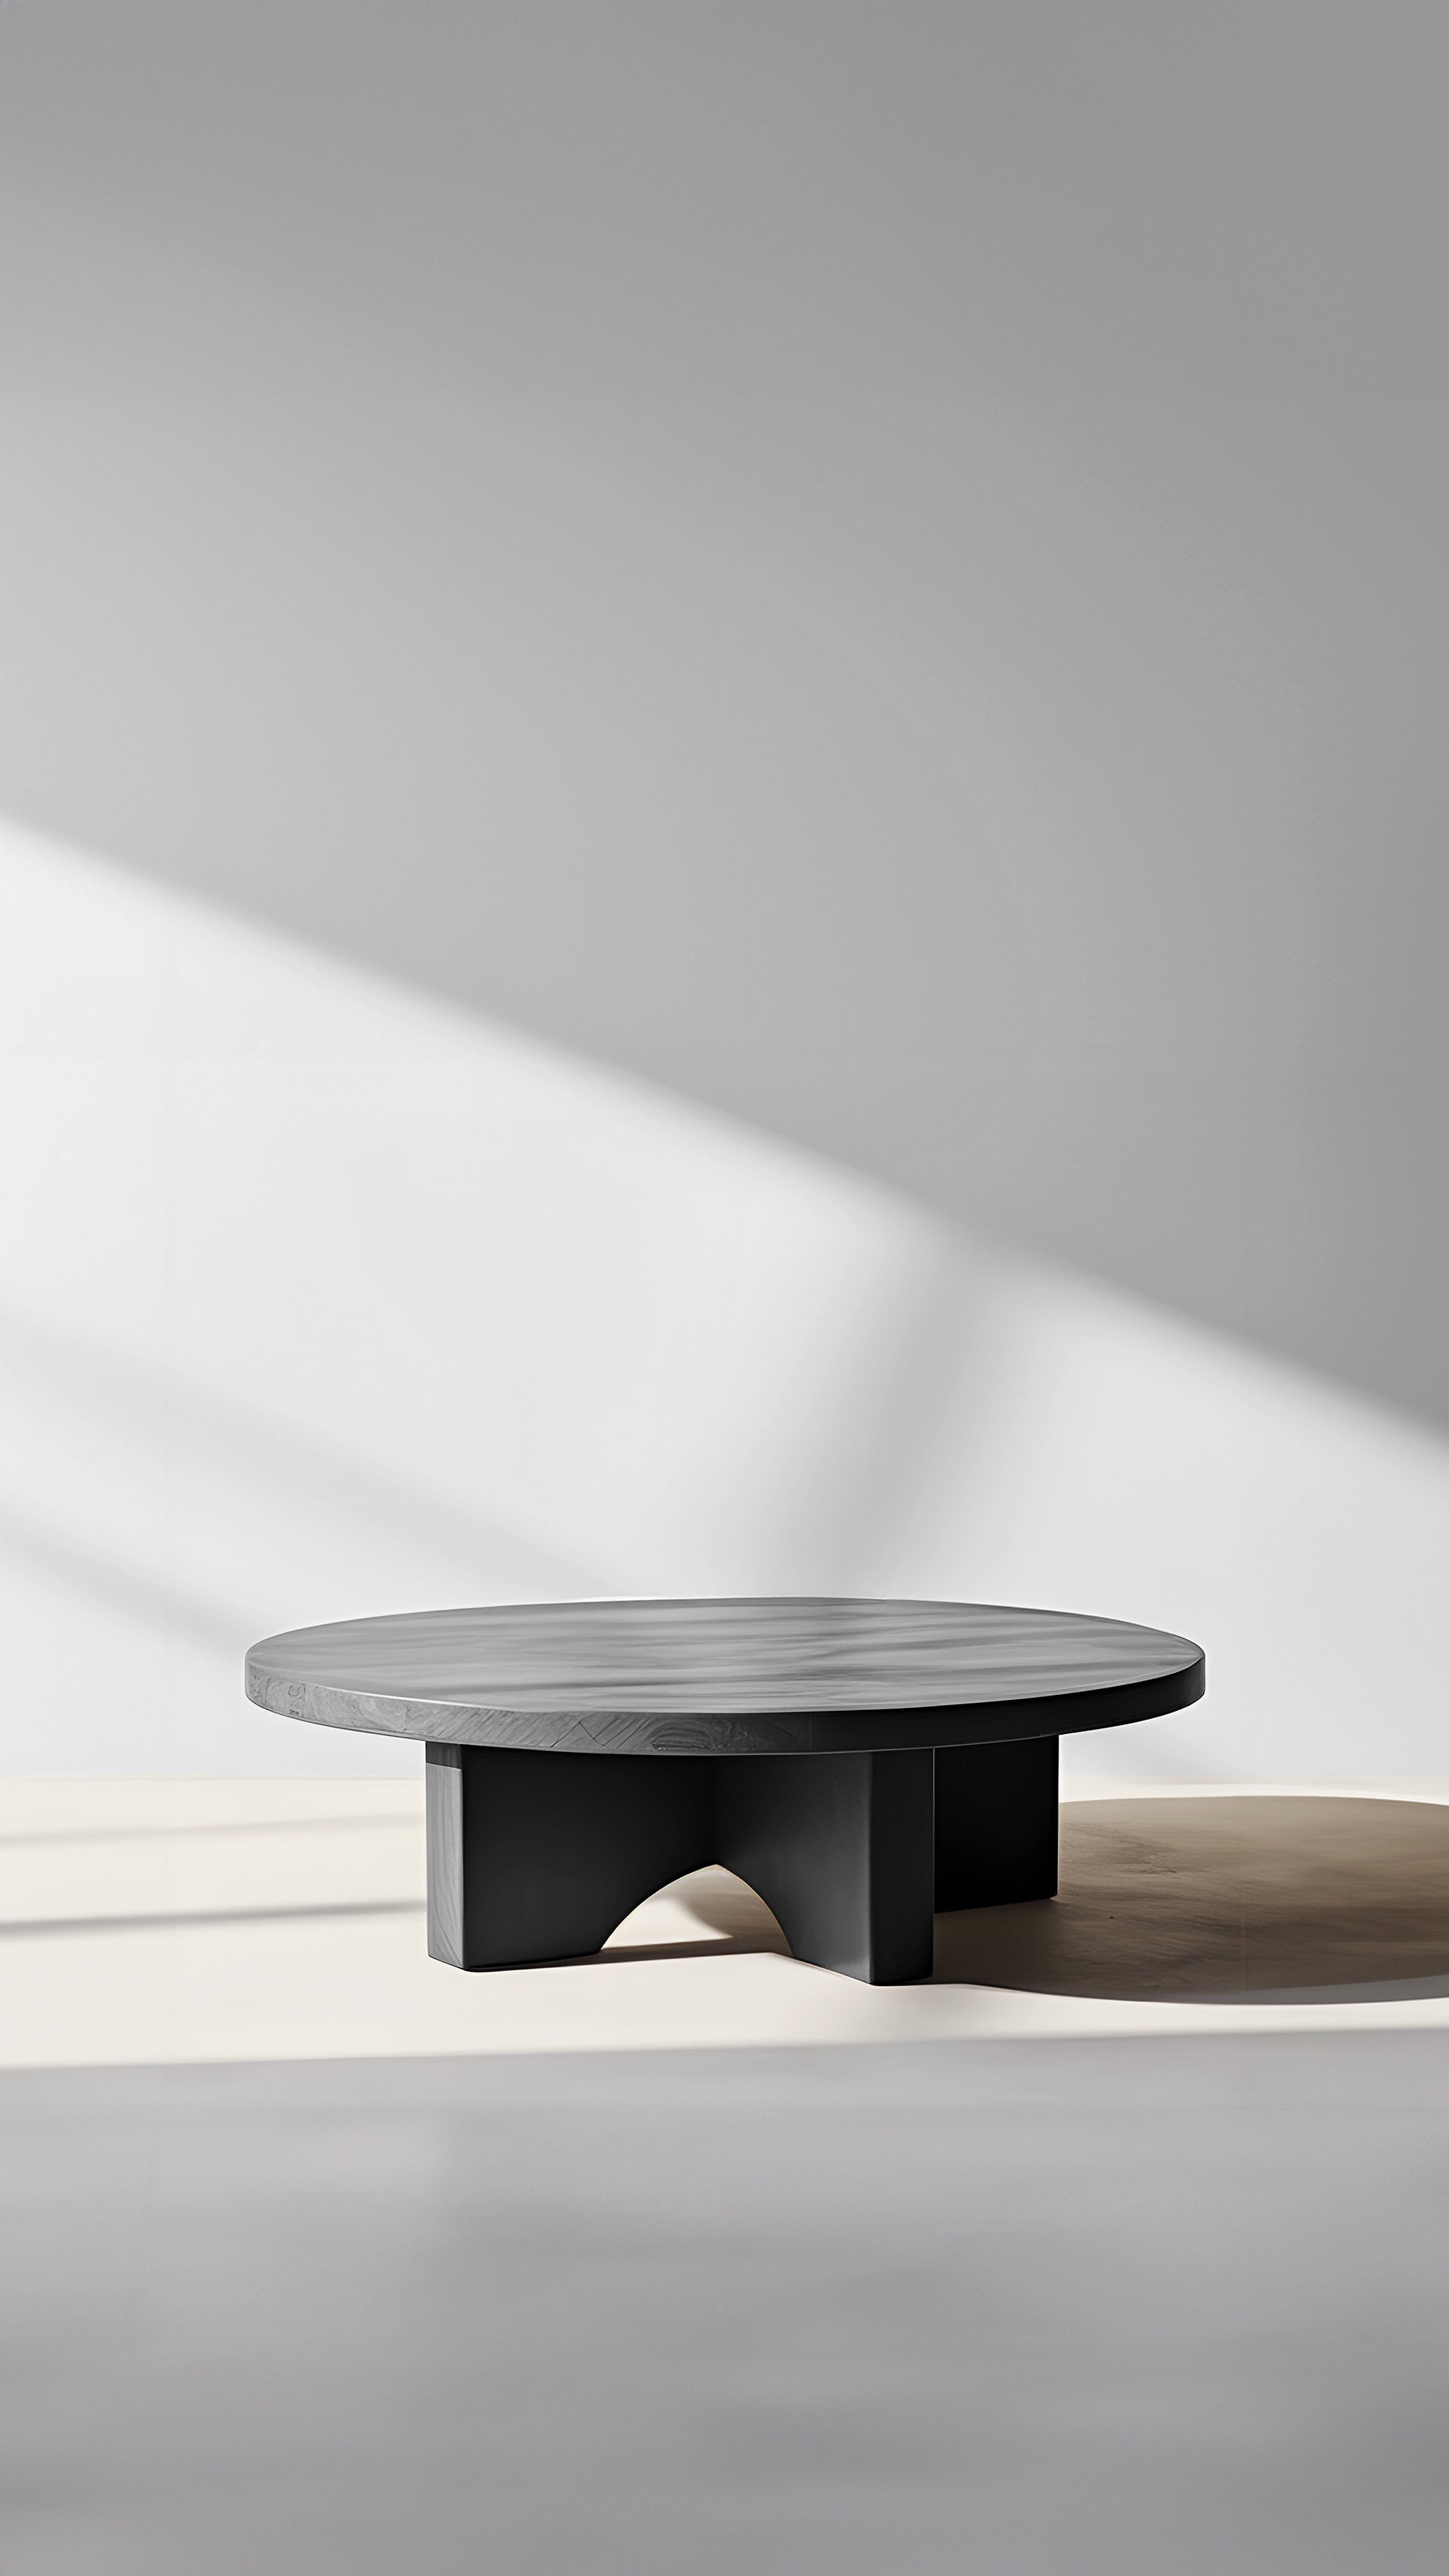 Low-Set Round Coffee Table - Dark Finish Fundamenta 42 by NONO —7.jpg